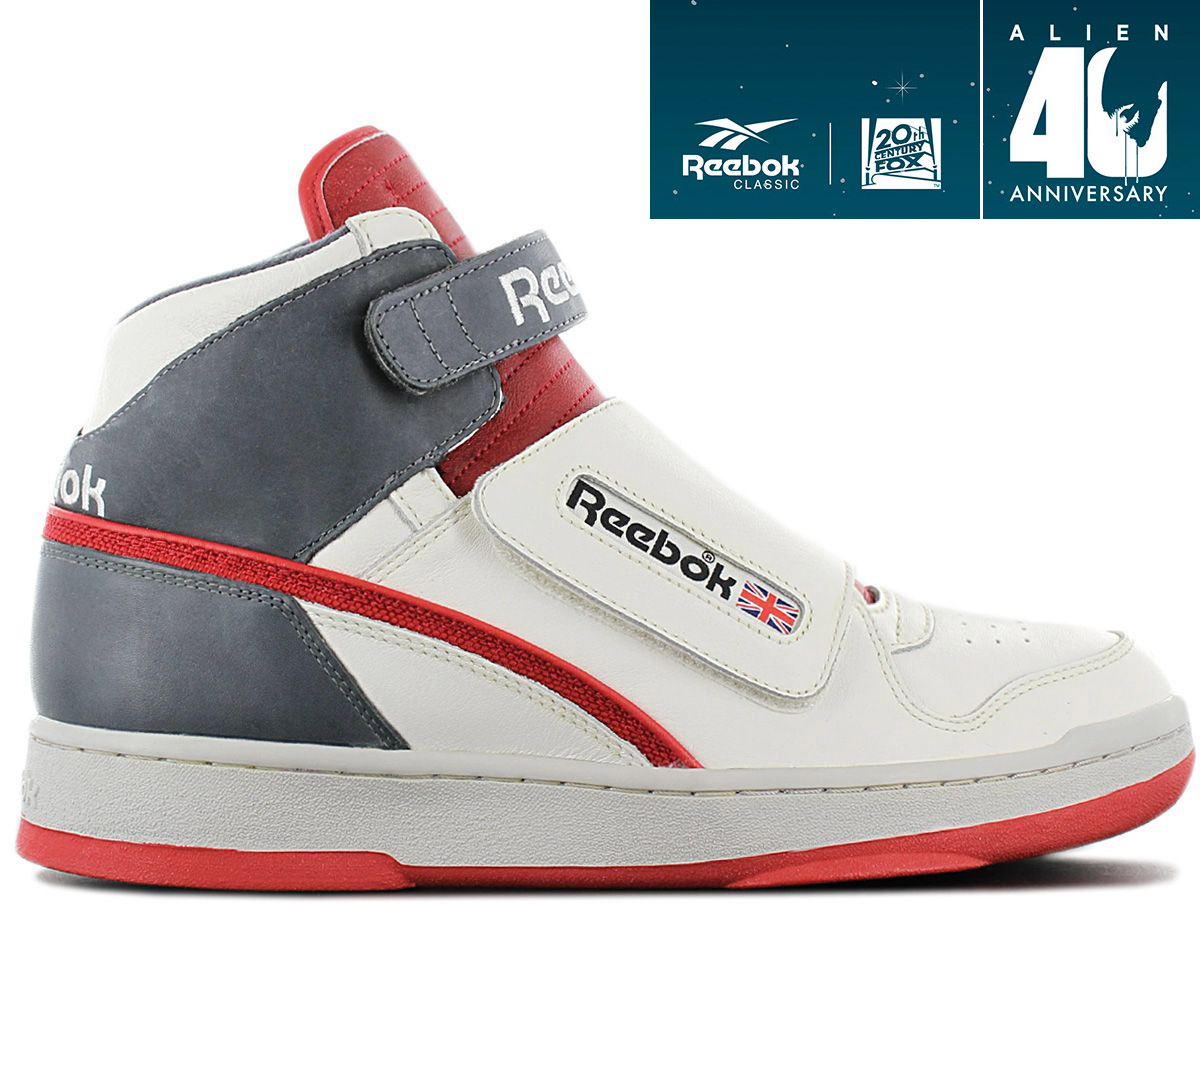 Reebok Alien Stomper Bishop - 40th Anniversary - DV8578 Schuhe Sneaker  Limitiert | eBay